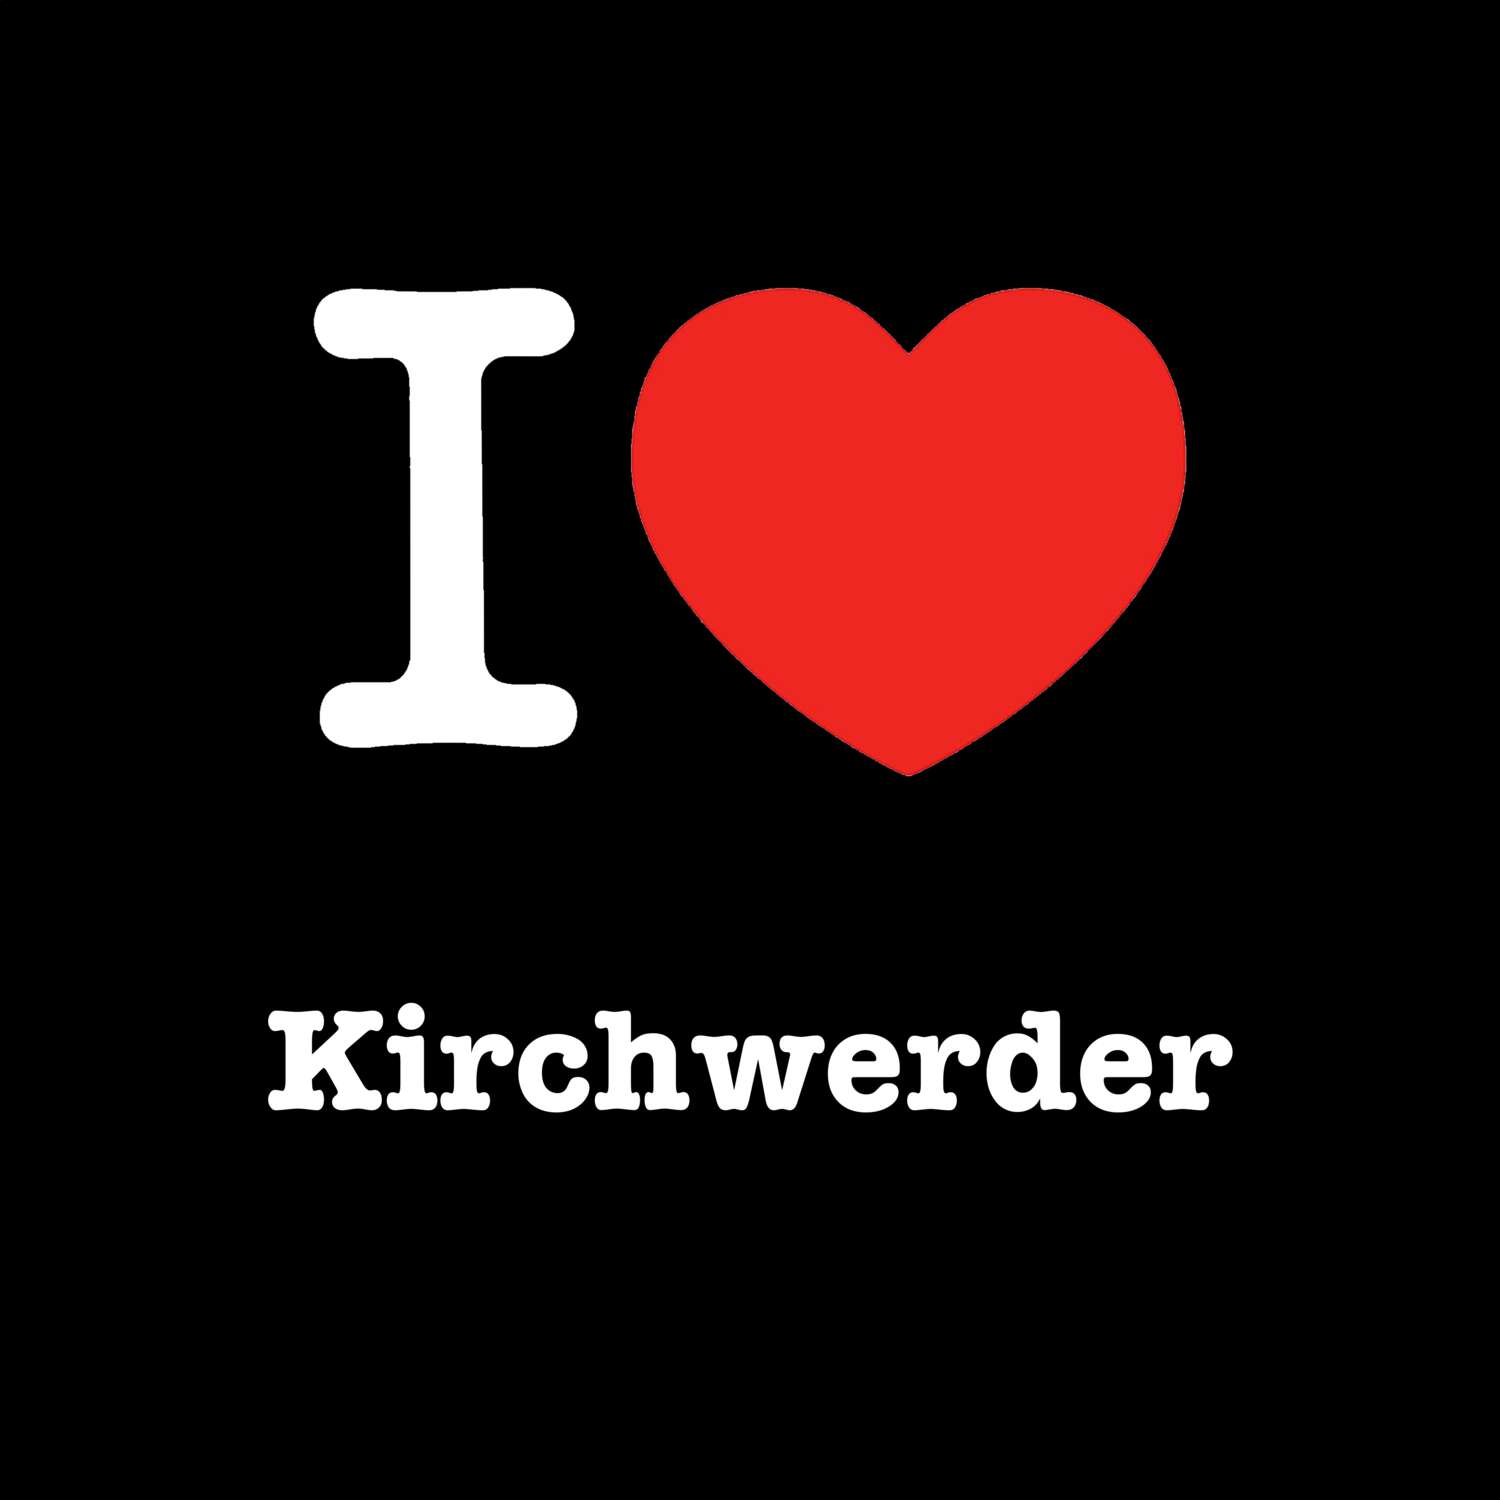 Kirchwerder T-Shirt »I love«